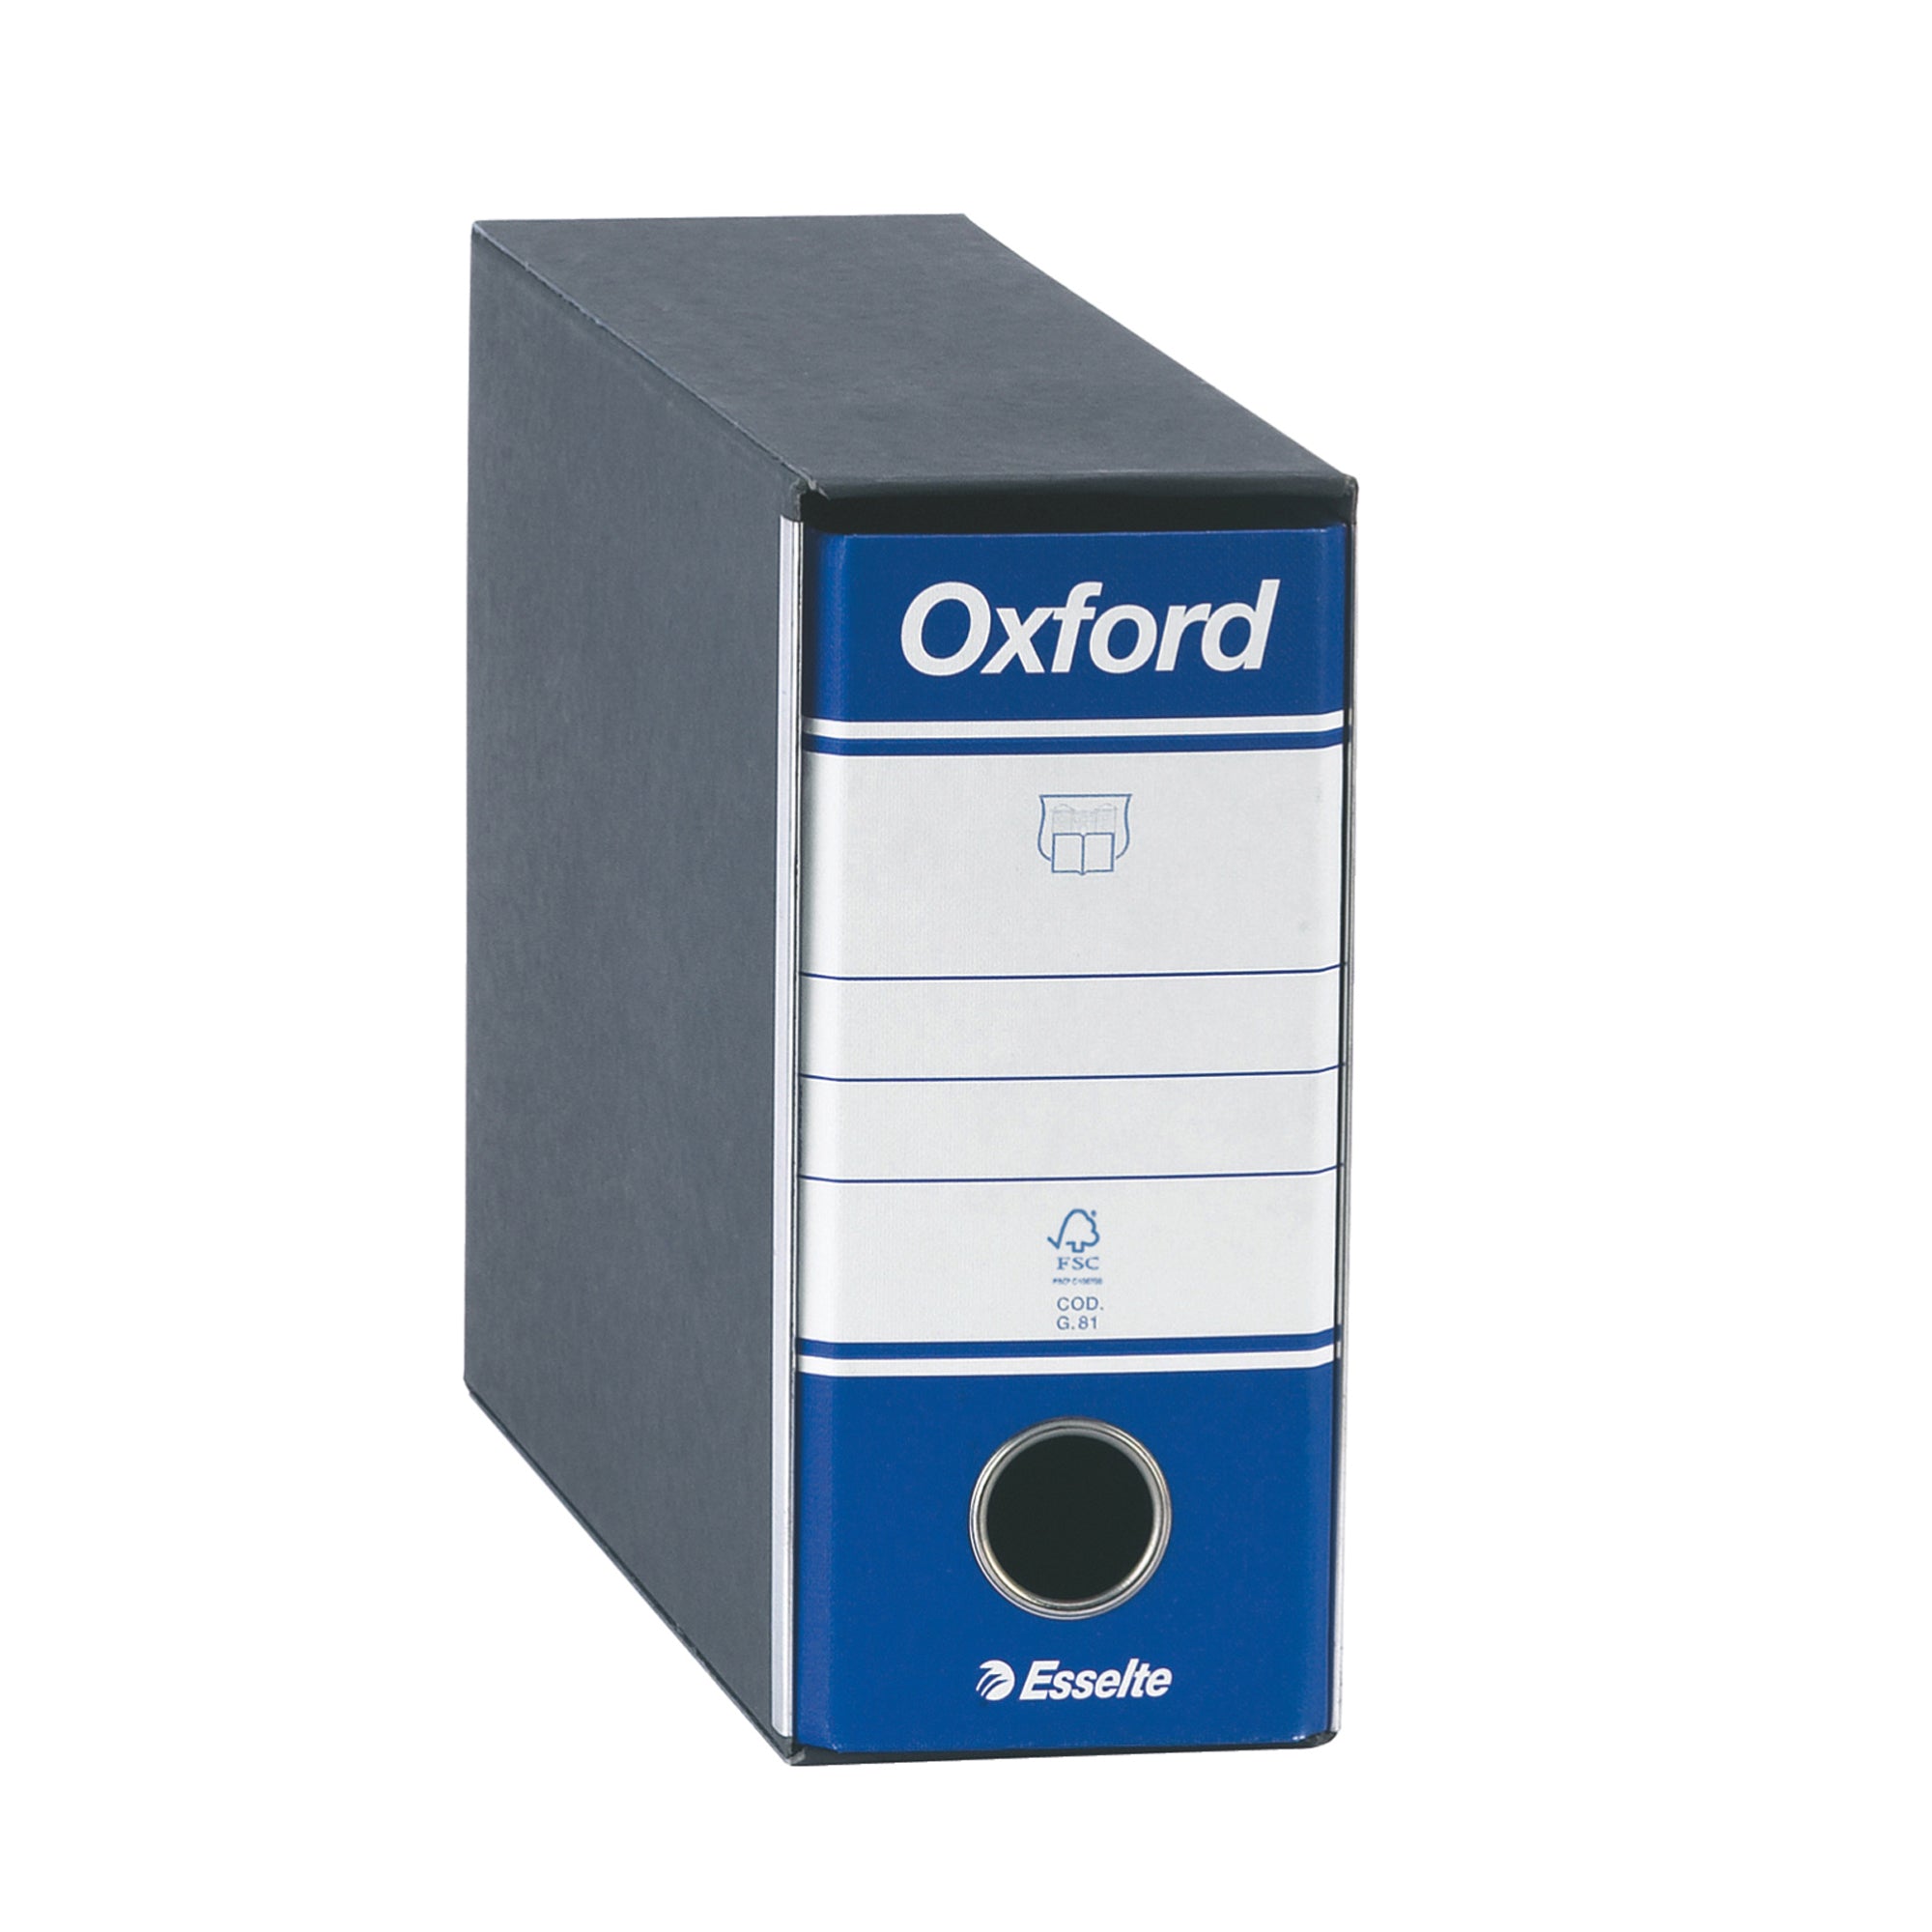 esselte-registratore-oxford-g81-blu-dorso-8cm-f-to-memorandum